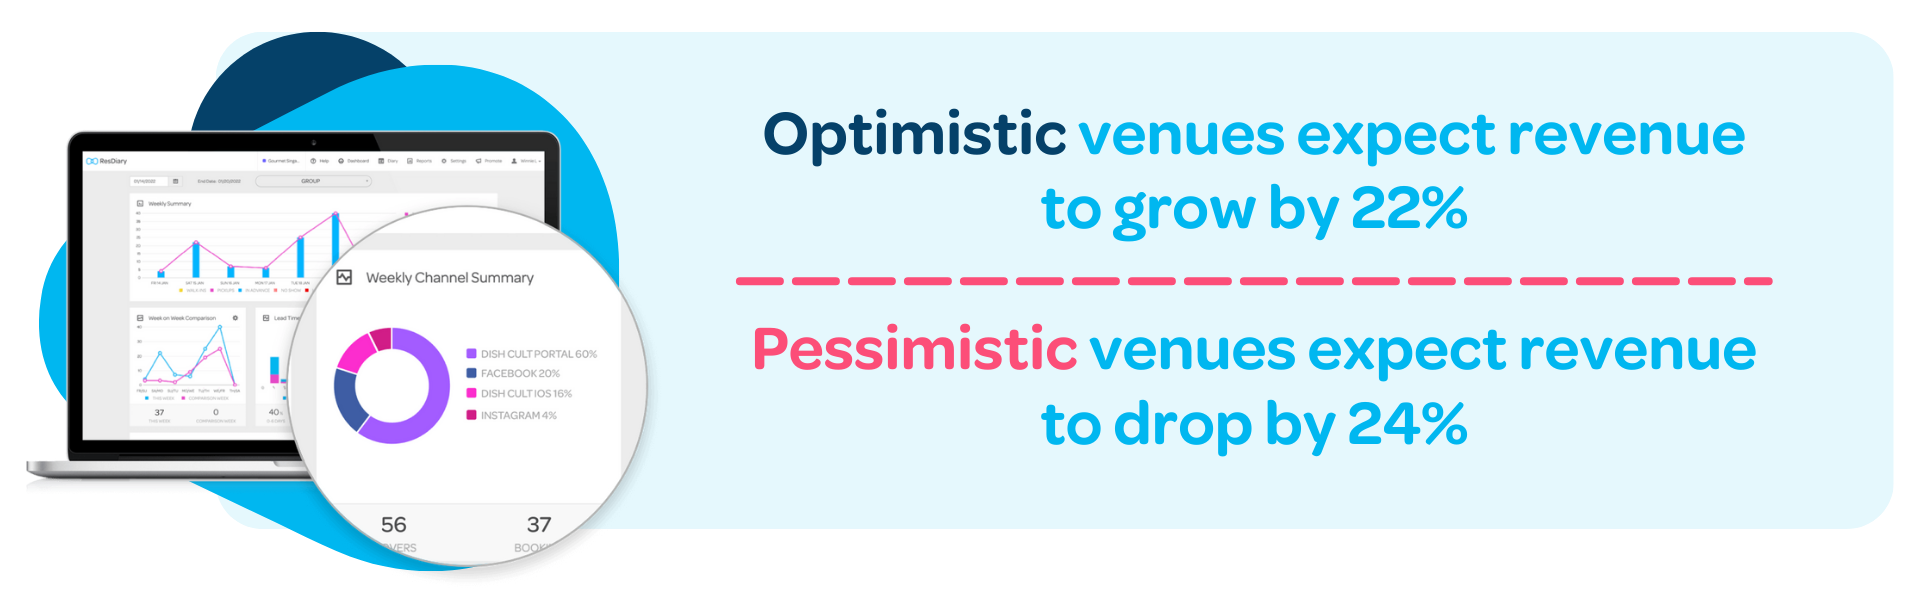 Optimistic venues vs pessimistic venues in hospitality industry report 2024